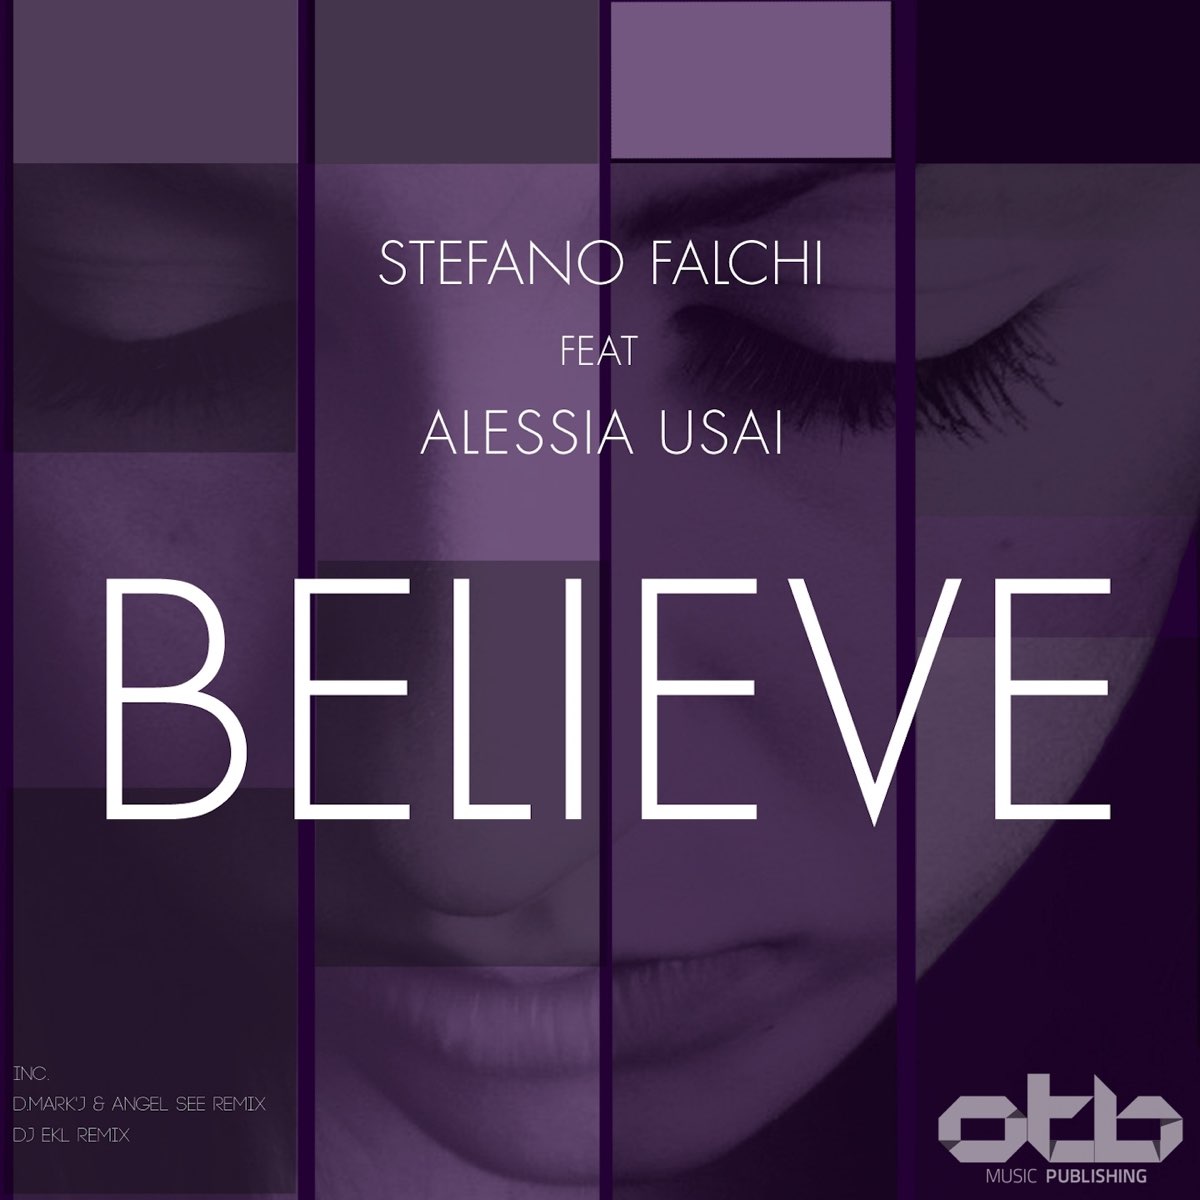 I can believe me песня. Believe песня. Песня беливе. Believe (Radio Mix).mp3. Believe песня слушать.